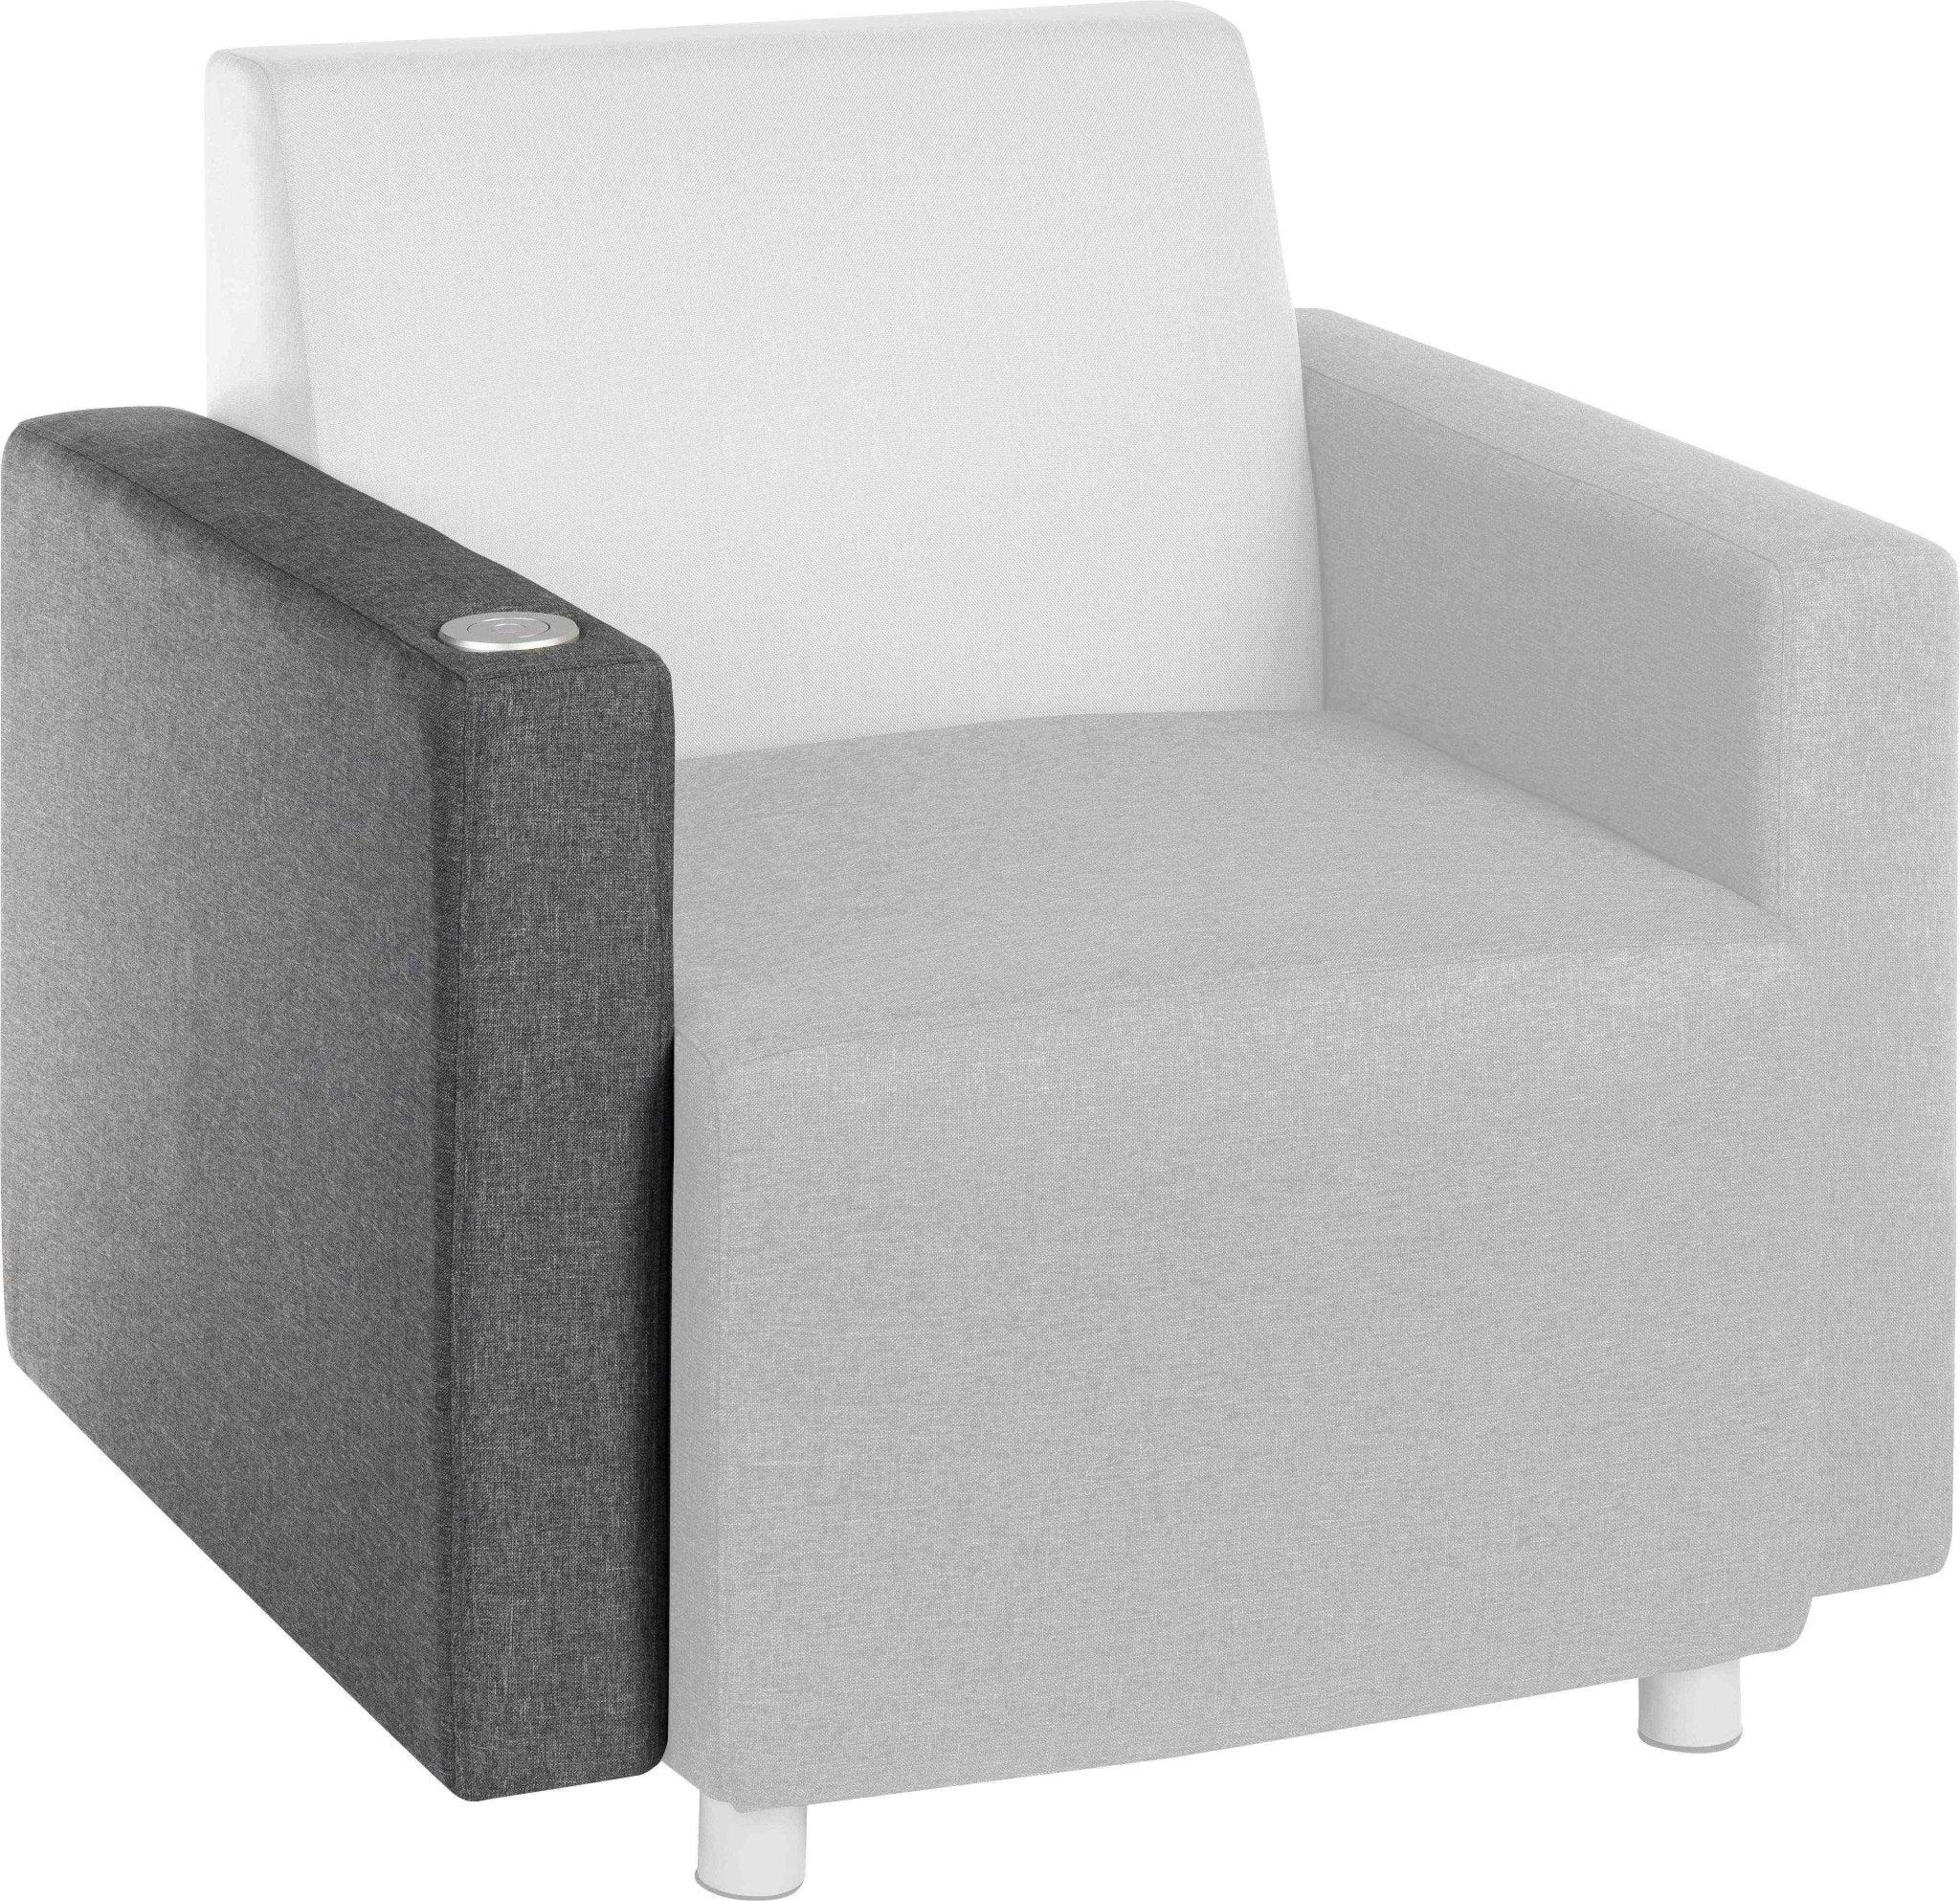 Cube modular reception chair usb arm right - crimblefest furniture - image 1